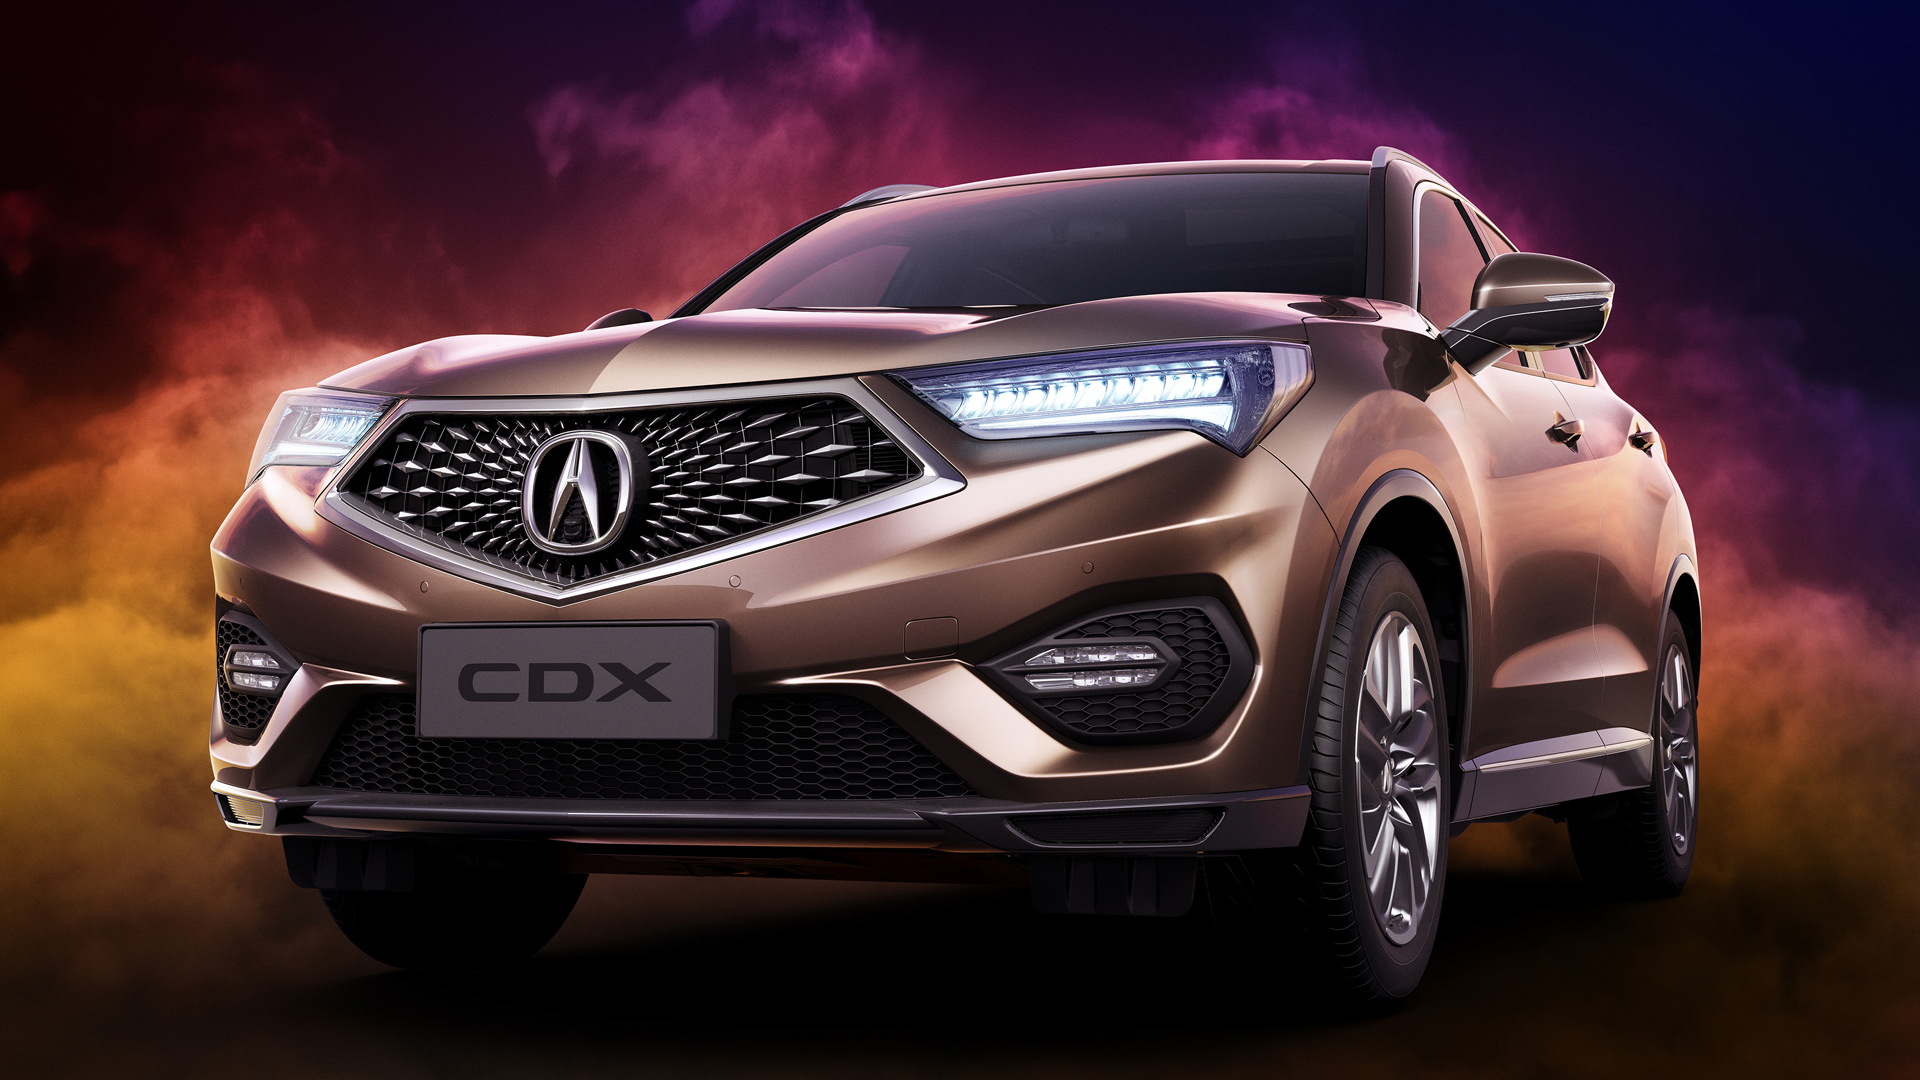 2016 Acura CDX (Chinese spec)